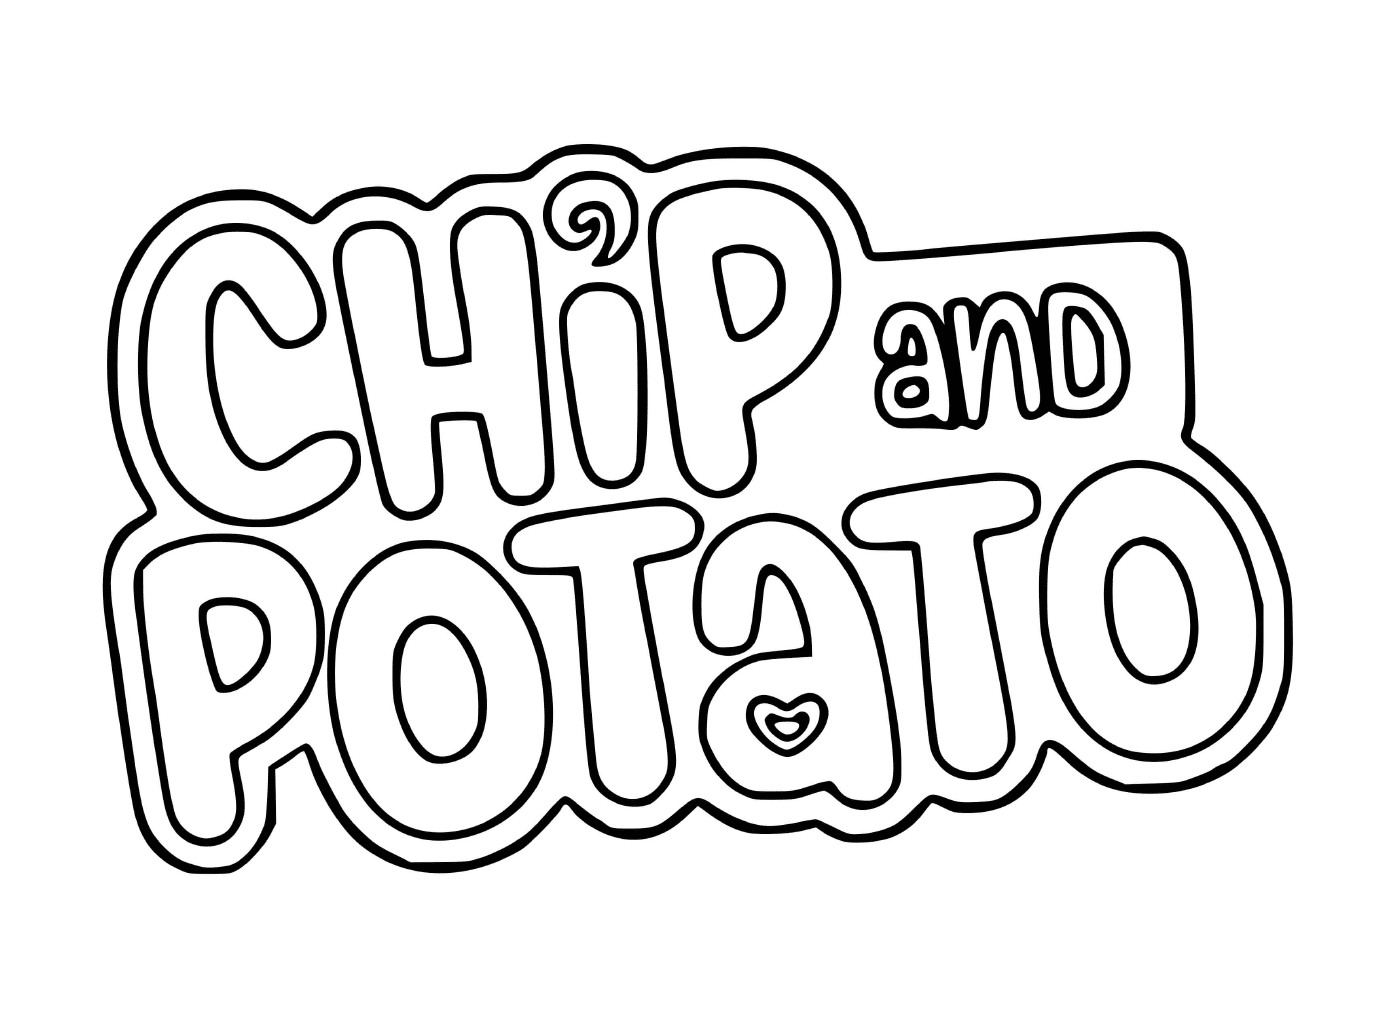  Logo Chip e Patata 